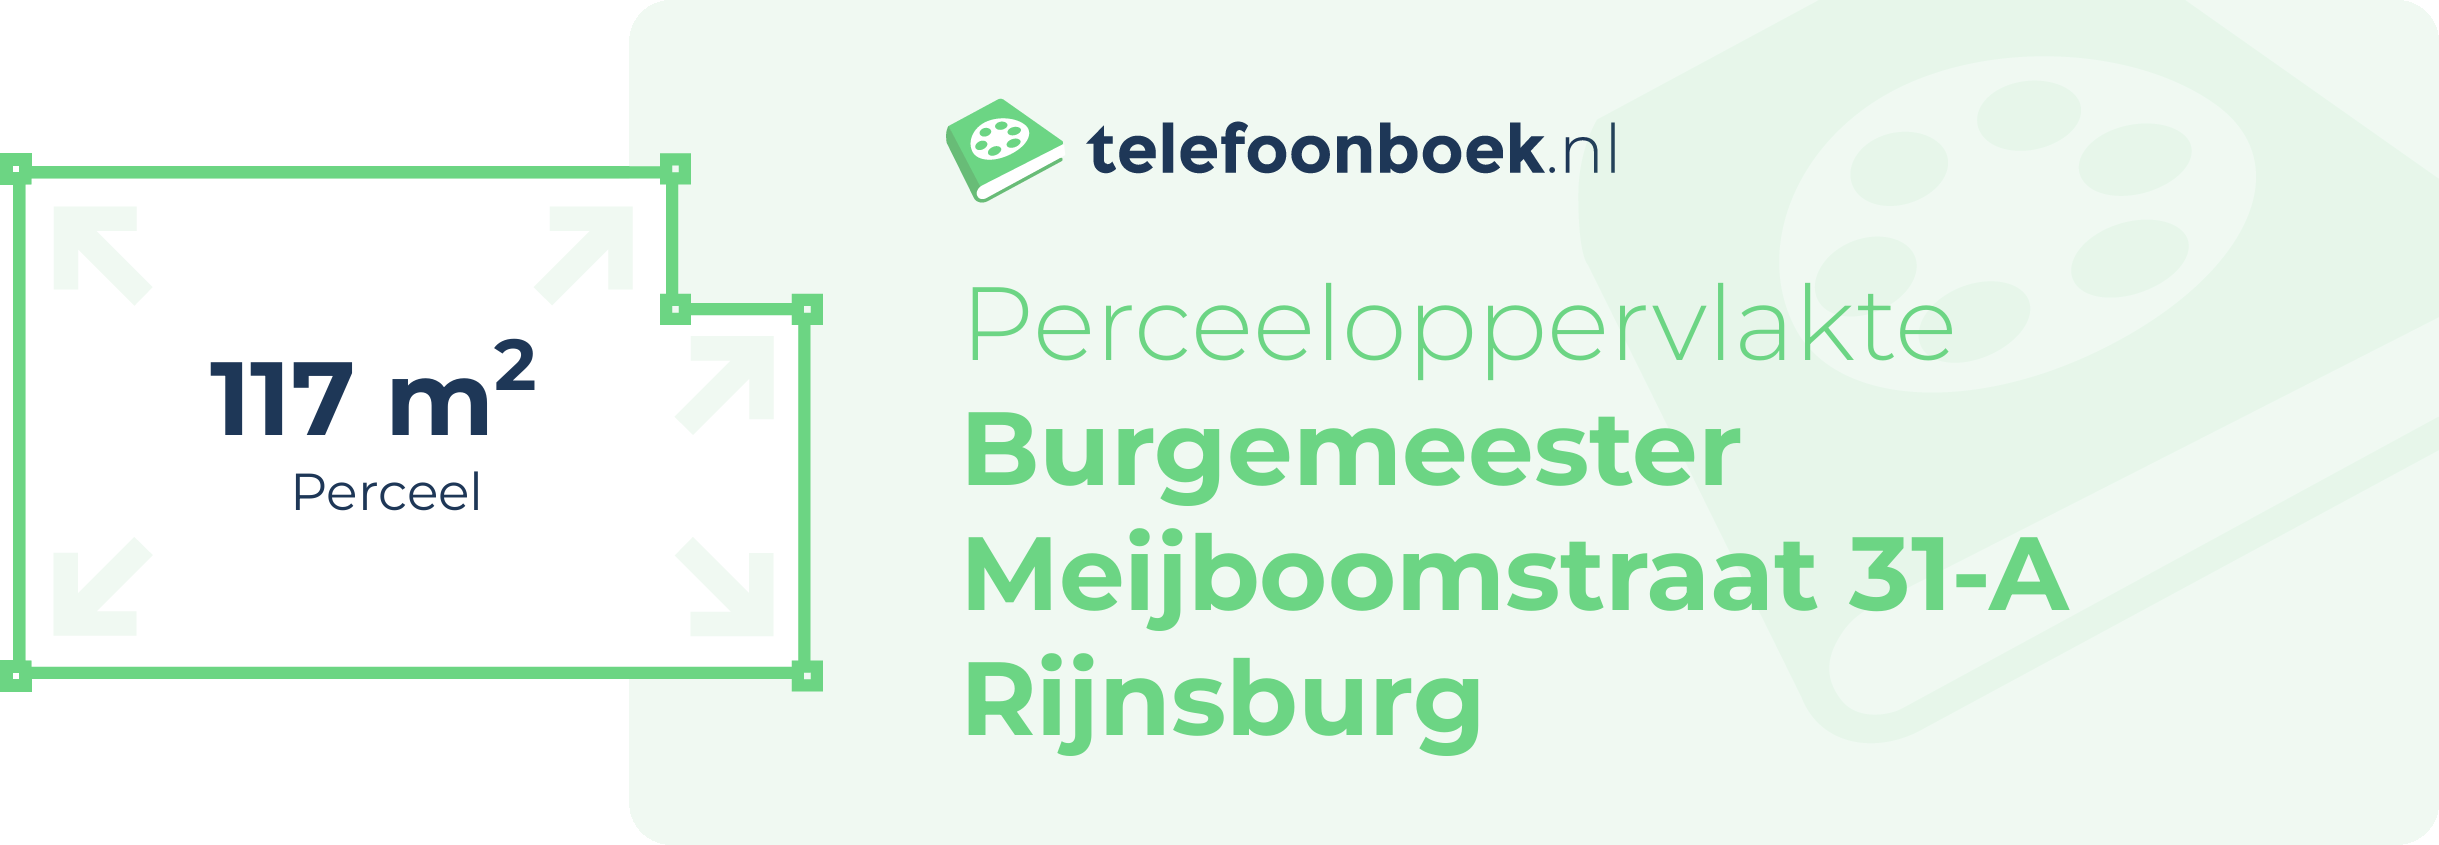 Perceeloppervlakte Burgemeester Meijboomstraat 31-A Rijnsburg